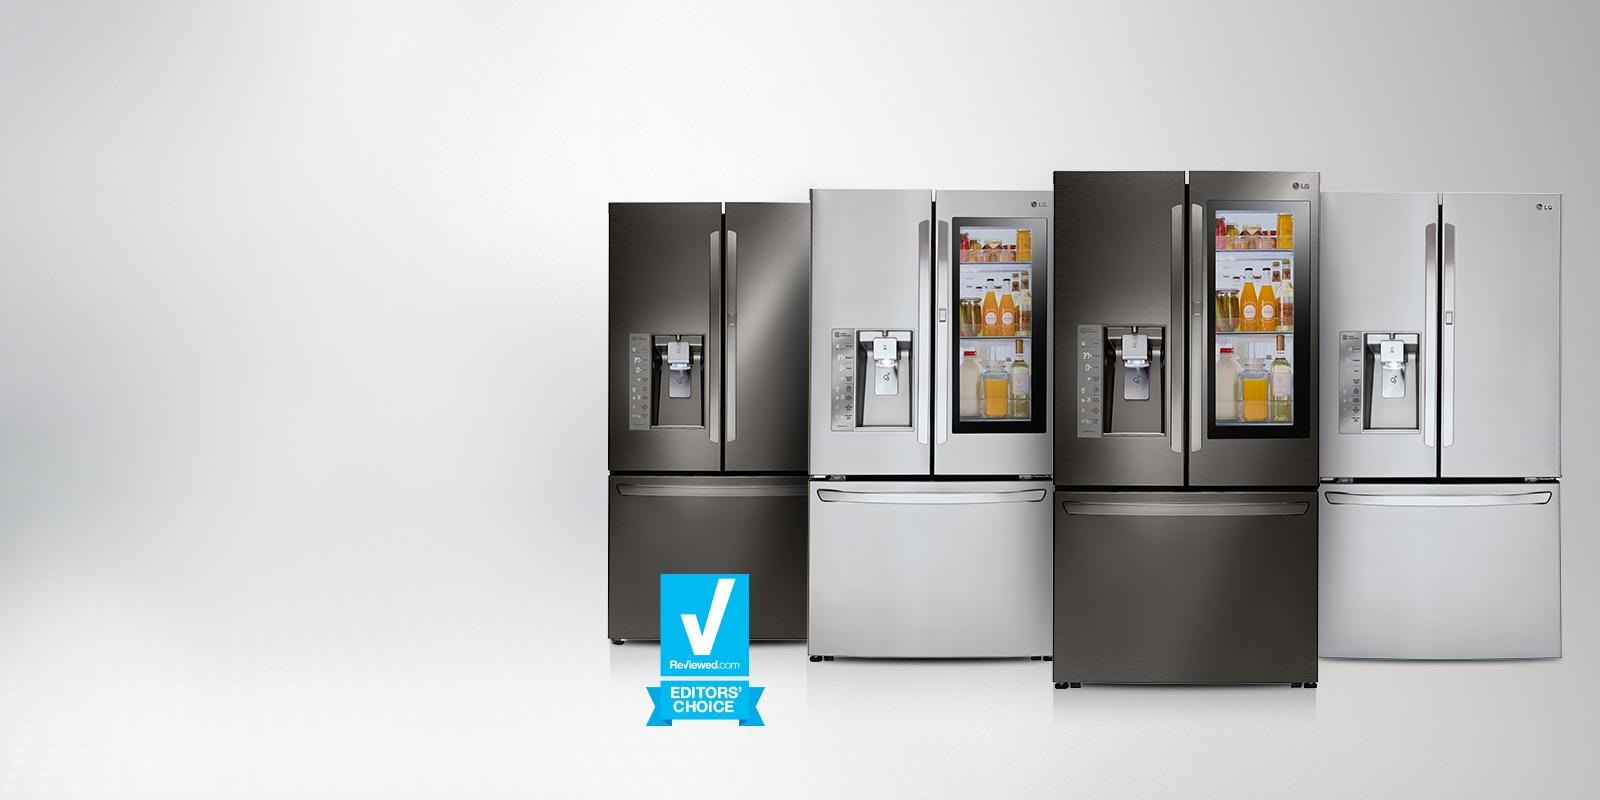 LG Appliances Compare Kitchen Home Appliances LG USA